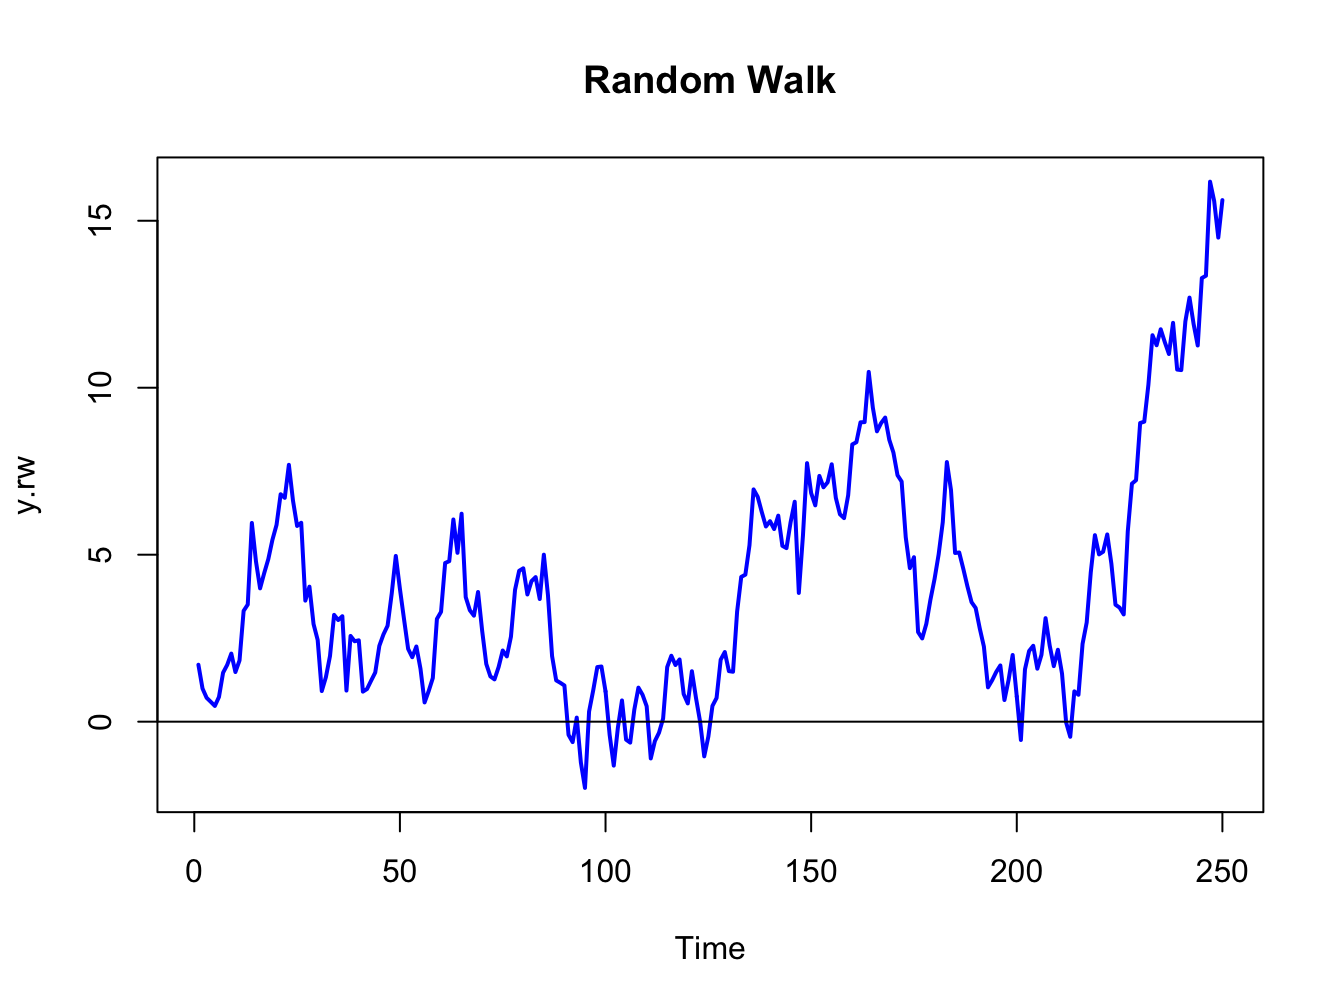 Random walk process: $Y_{t}=Y_{t-1}+\varepsilon_{t},\varepsilon_{t}\sim\mathrm{GWN}(0,1)$.